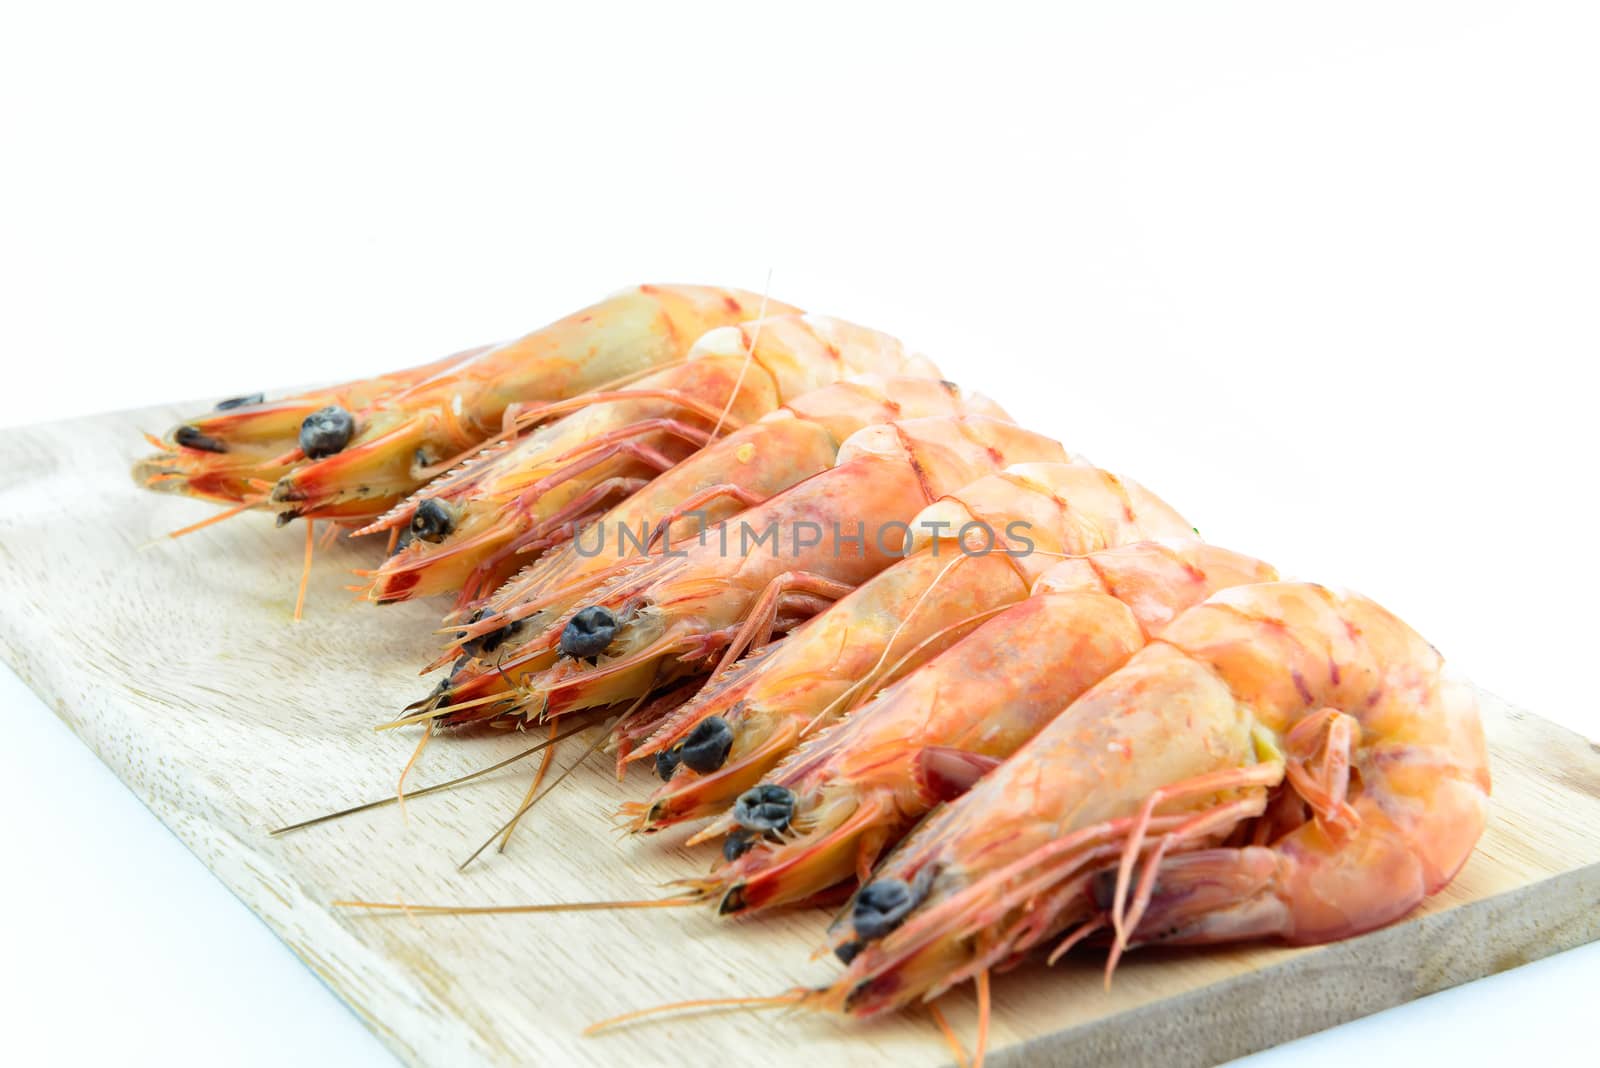 Boiled shrimp on wooden board on white background by YingTanthawarak